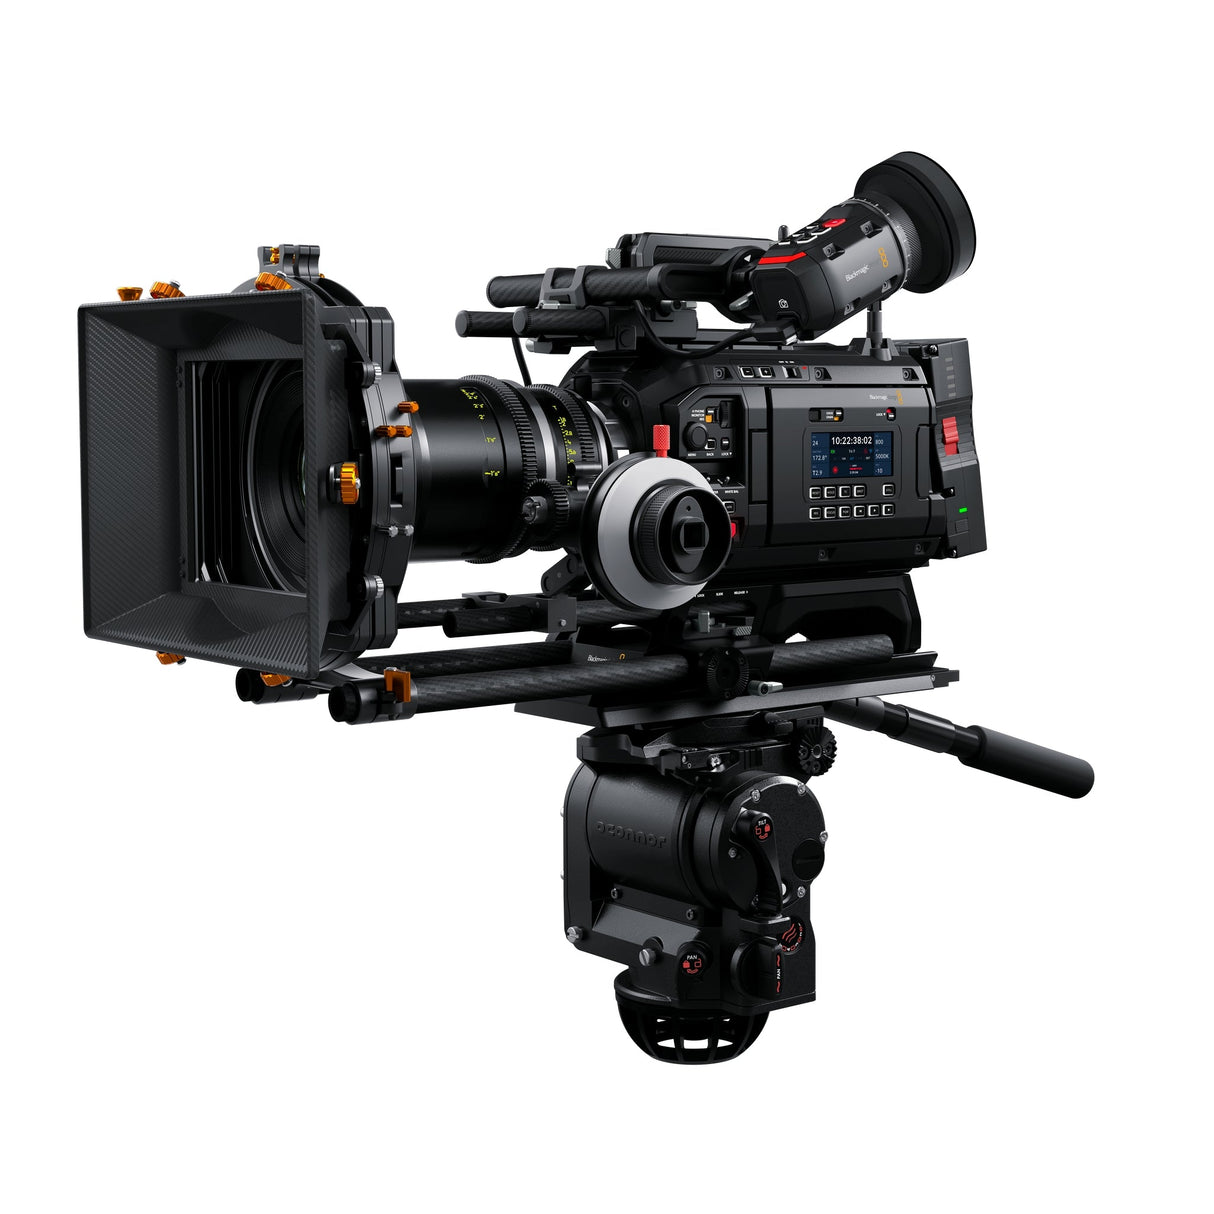 Blackmagic Design URSA Cine 12K RGBW High-End Digital Film Camera